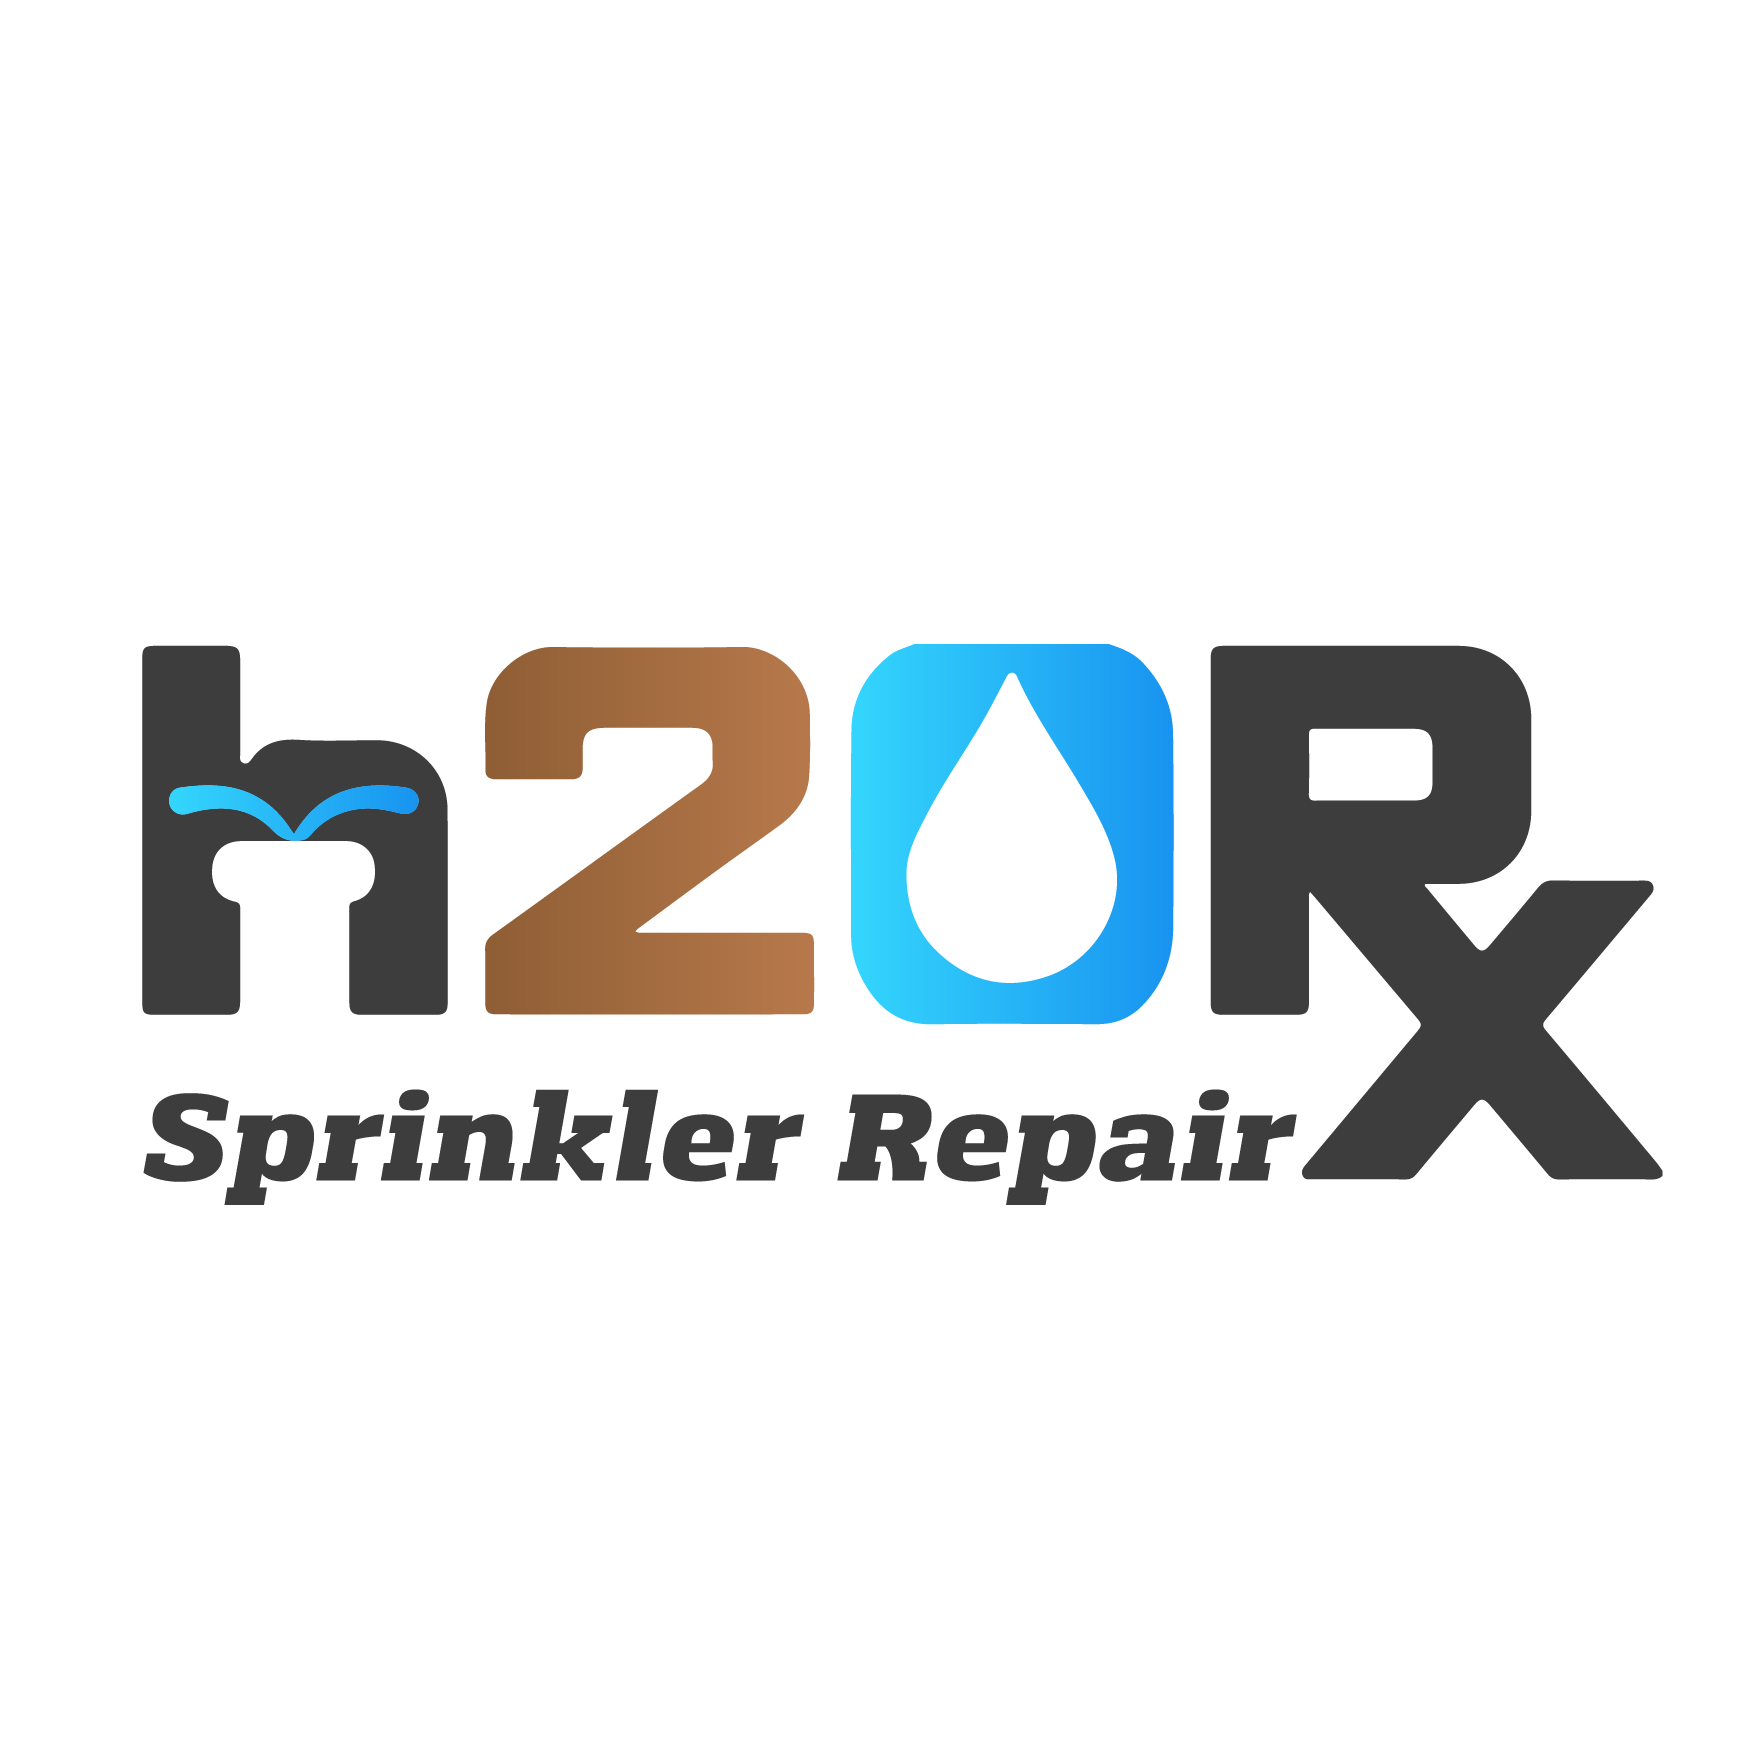 h2oRx Irrigation Services logo